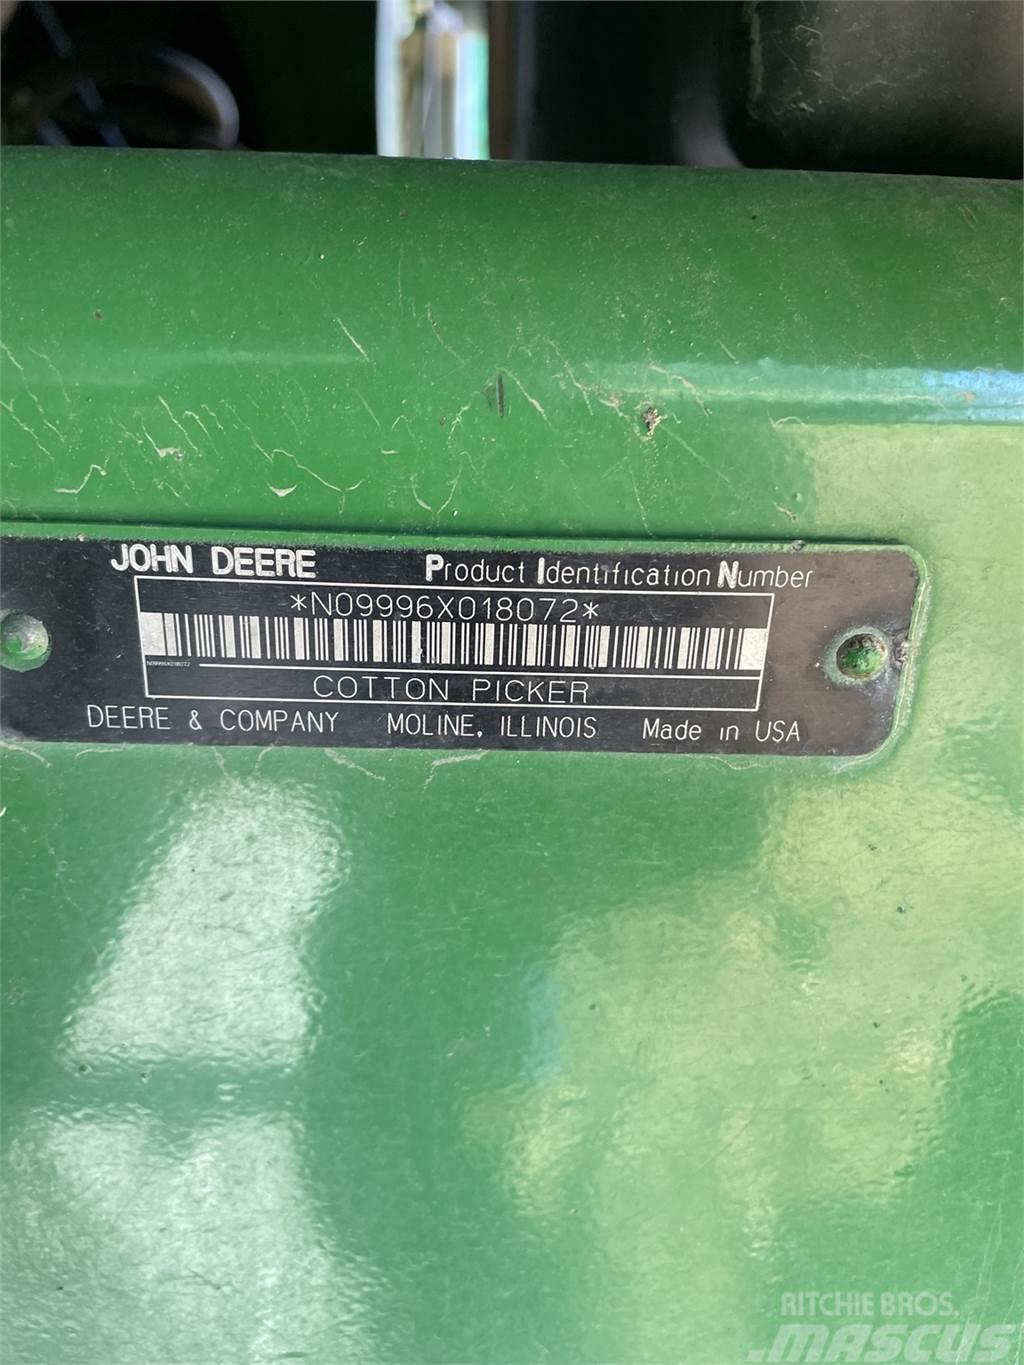 John Deere 9996 Altri macchinari per raccolta